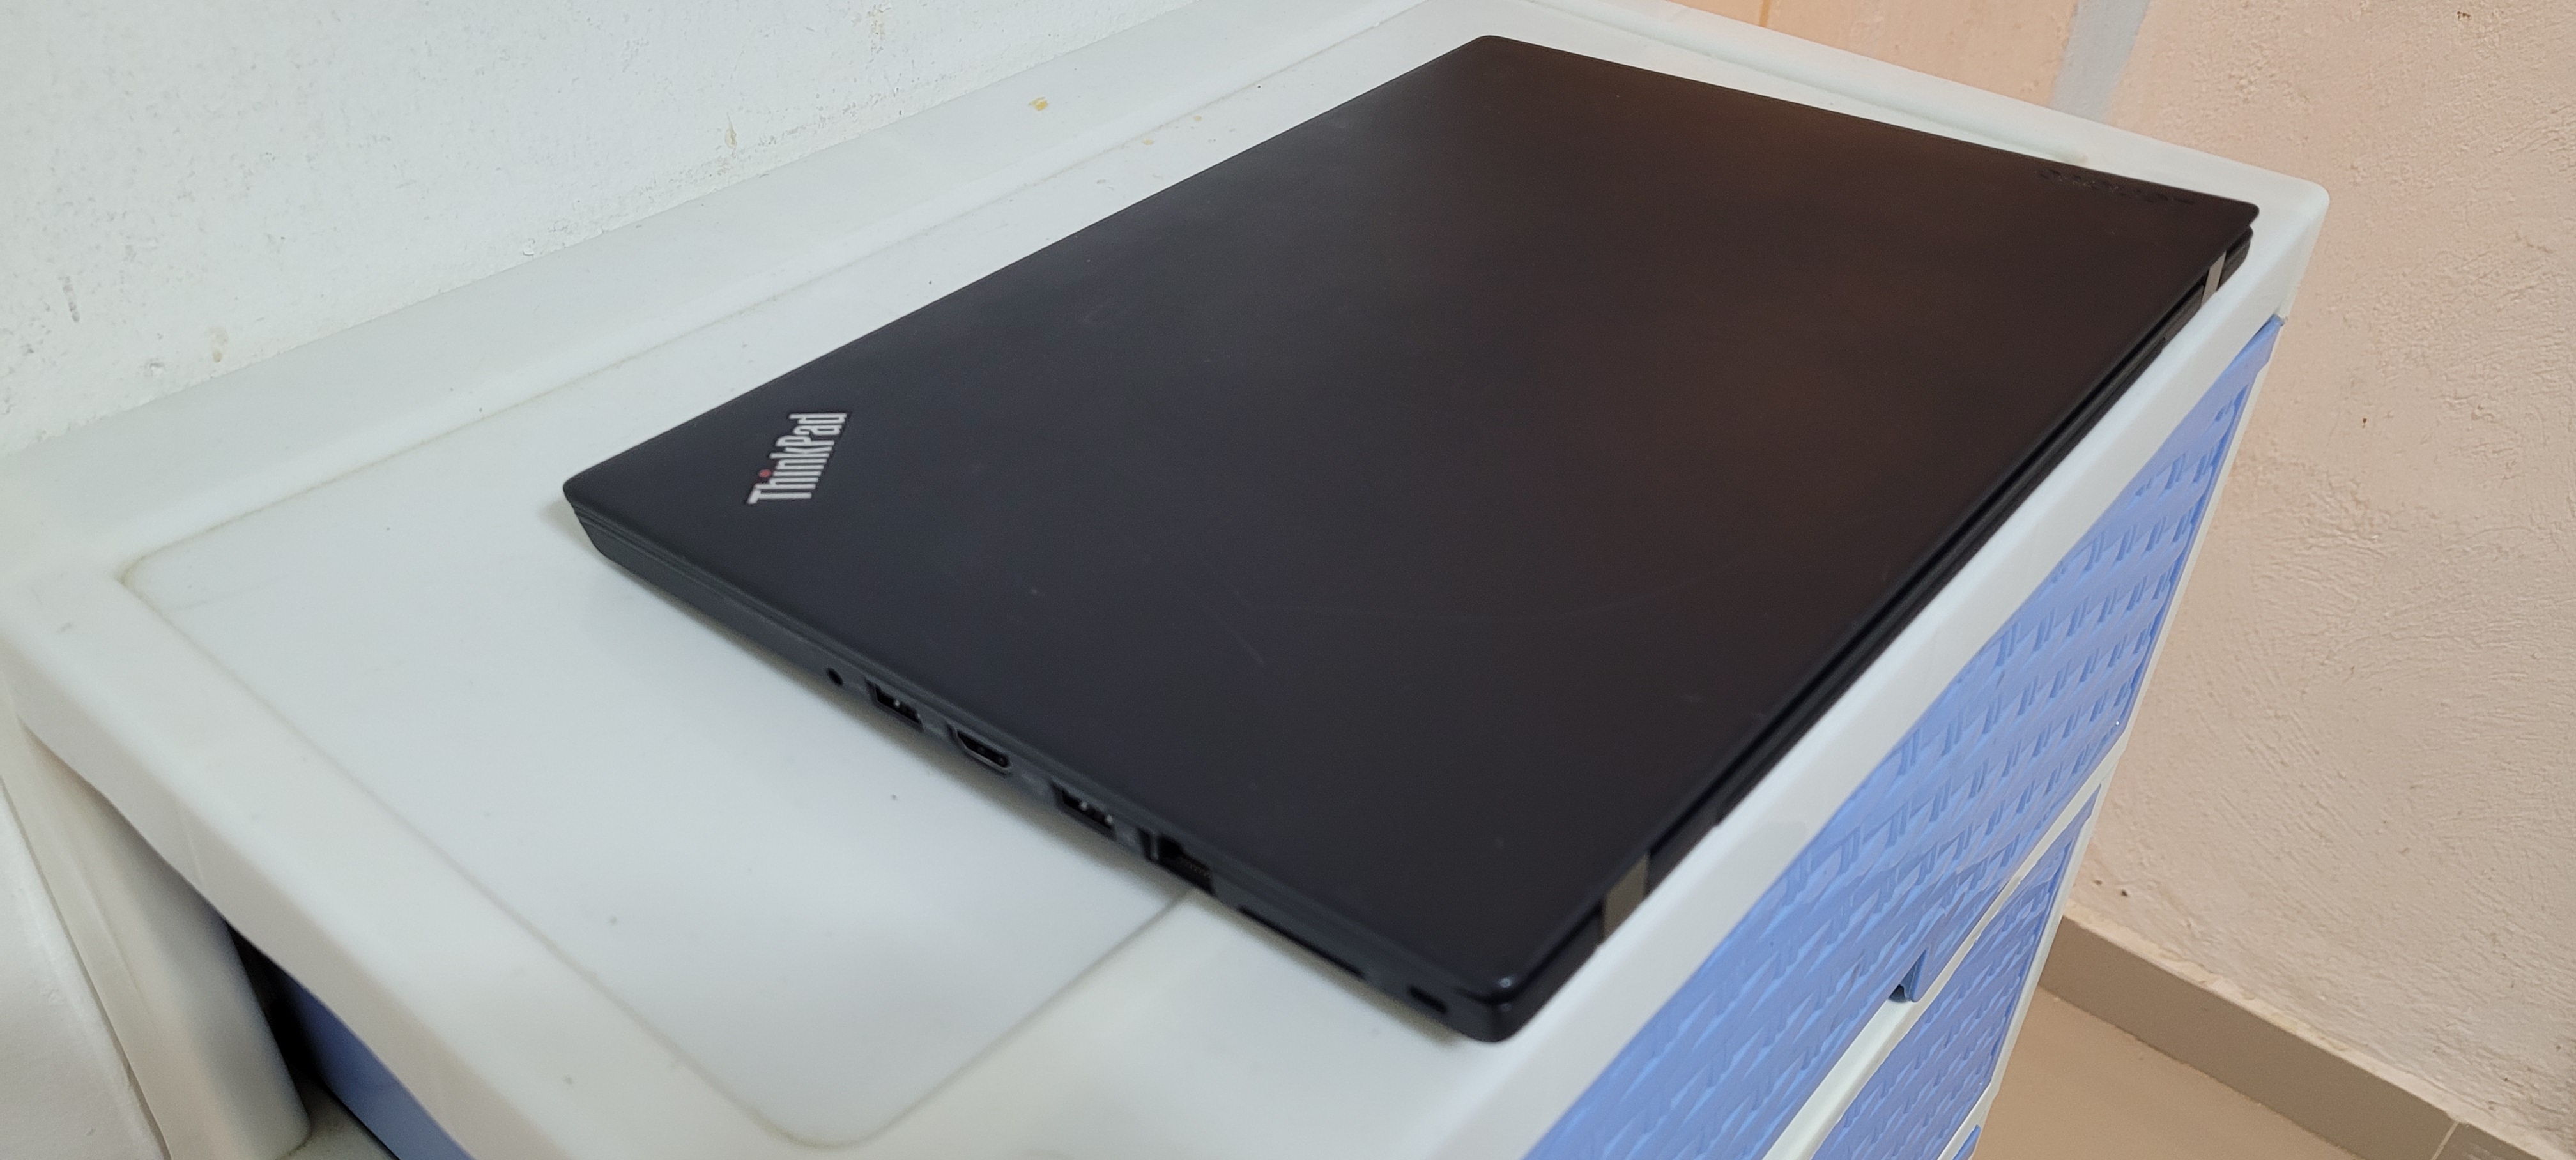 computadoras y laptops - Laptop lenovo Slim 14 Pulg Core i7 Ram 8gb Disco 256gb SSD Solido New 2